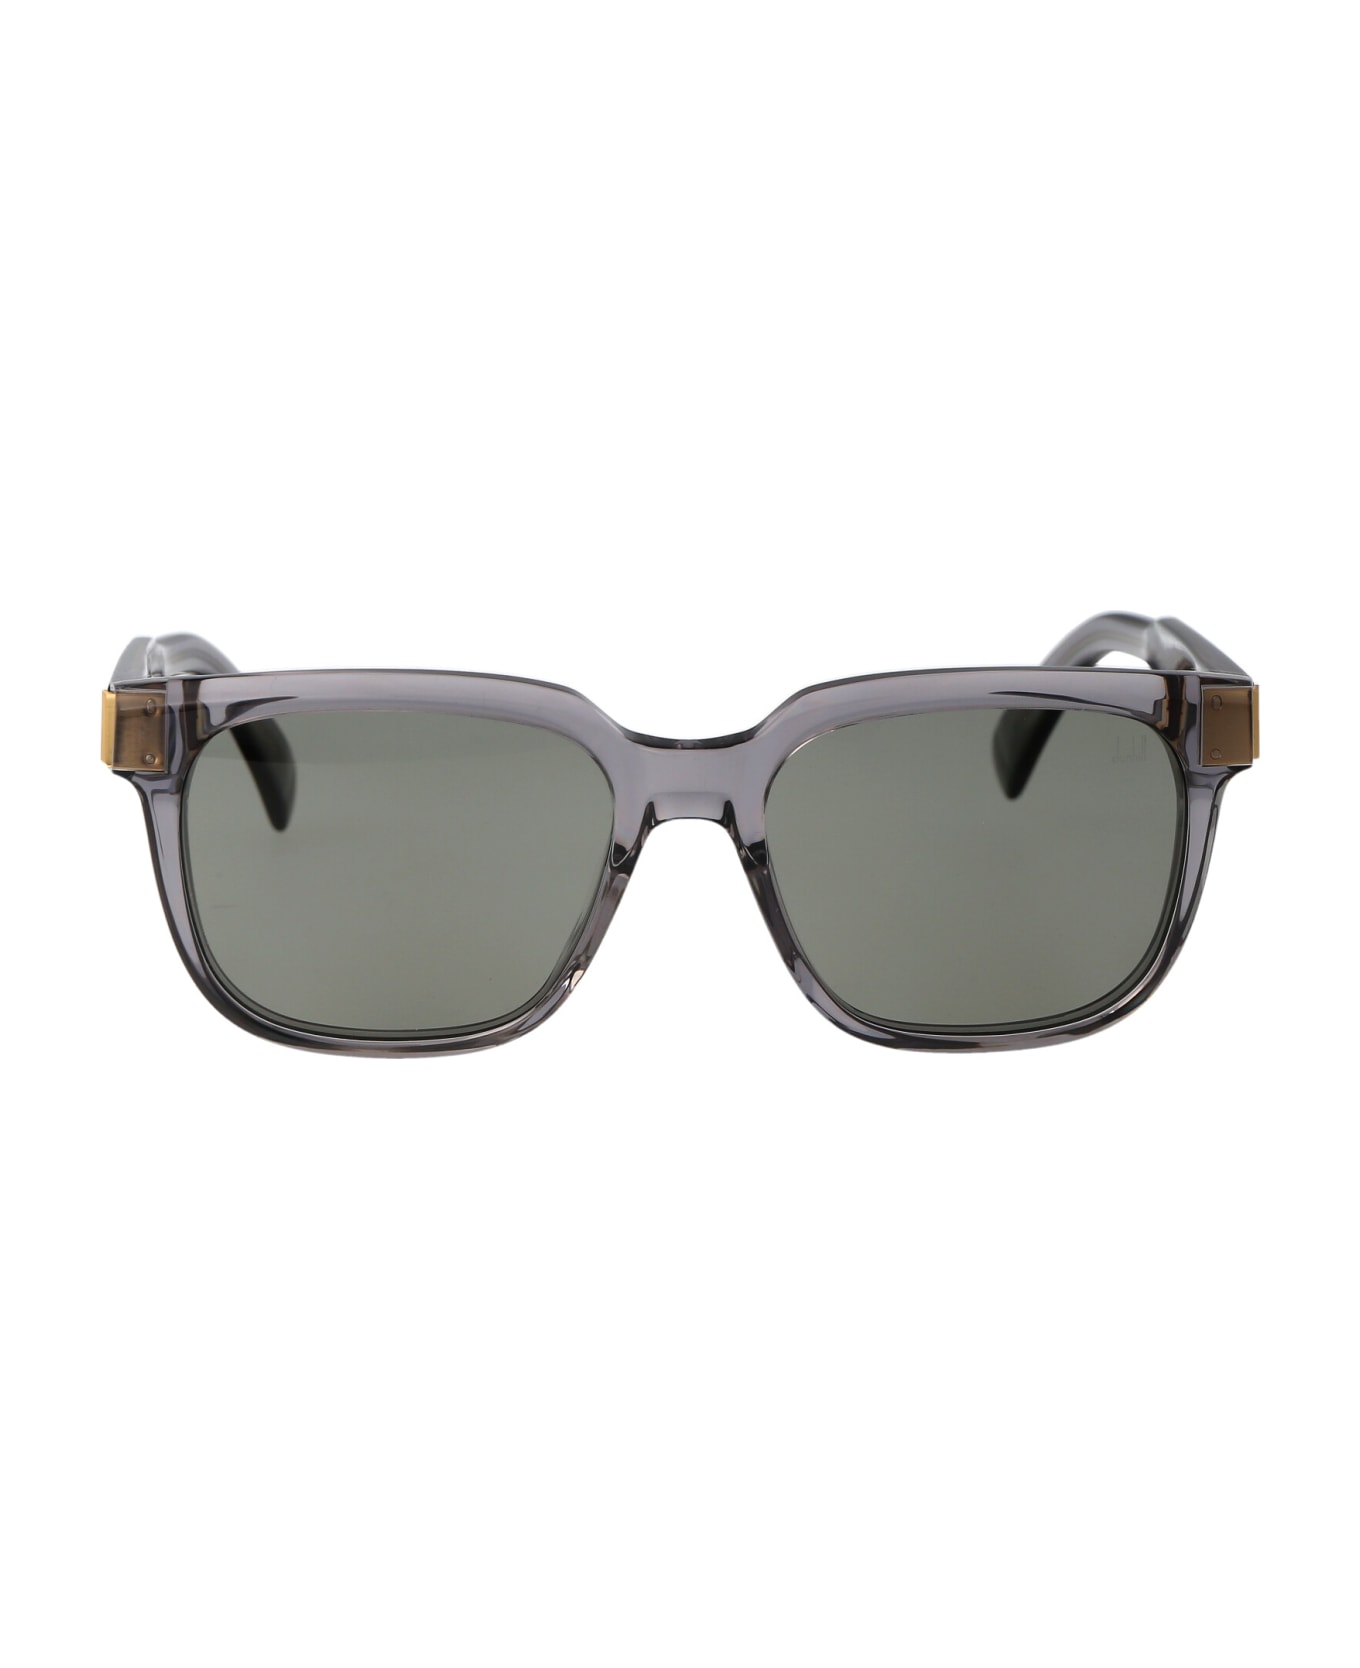 Dunhill Du0002s Sunglasses - 004 GREY GREY GREY サングラス